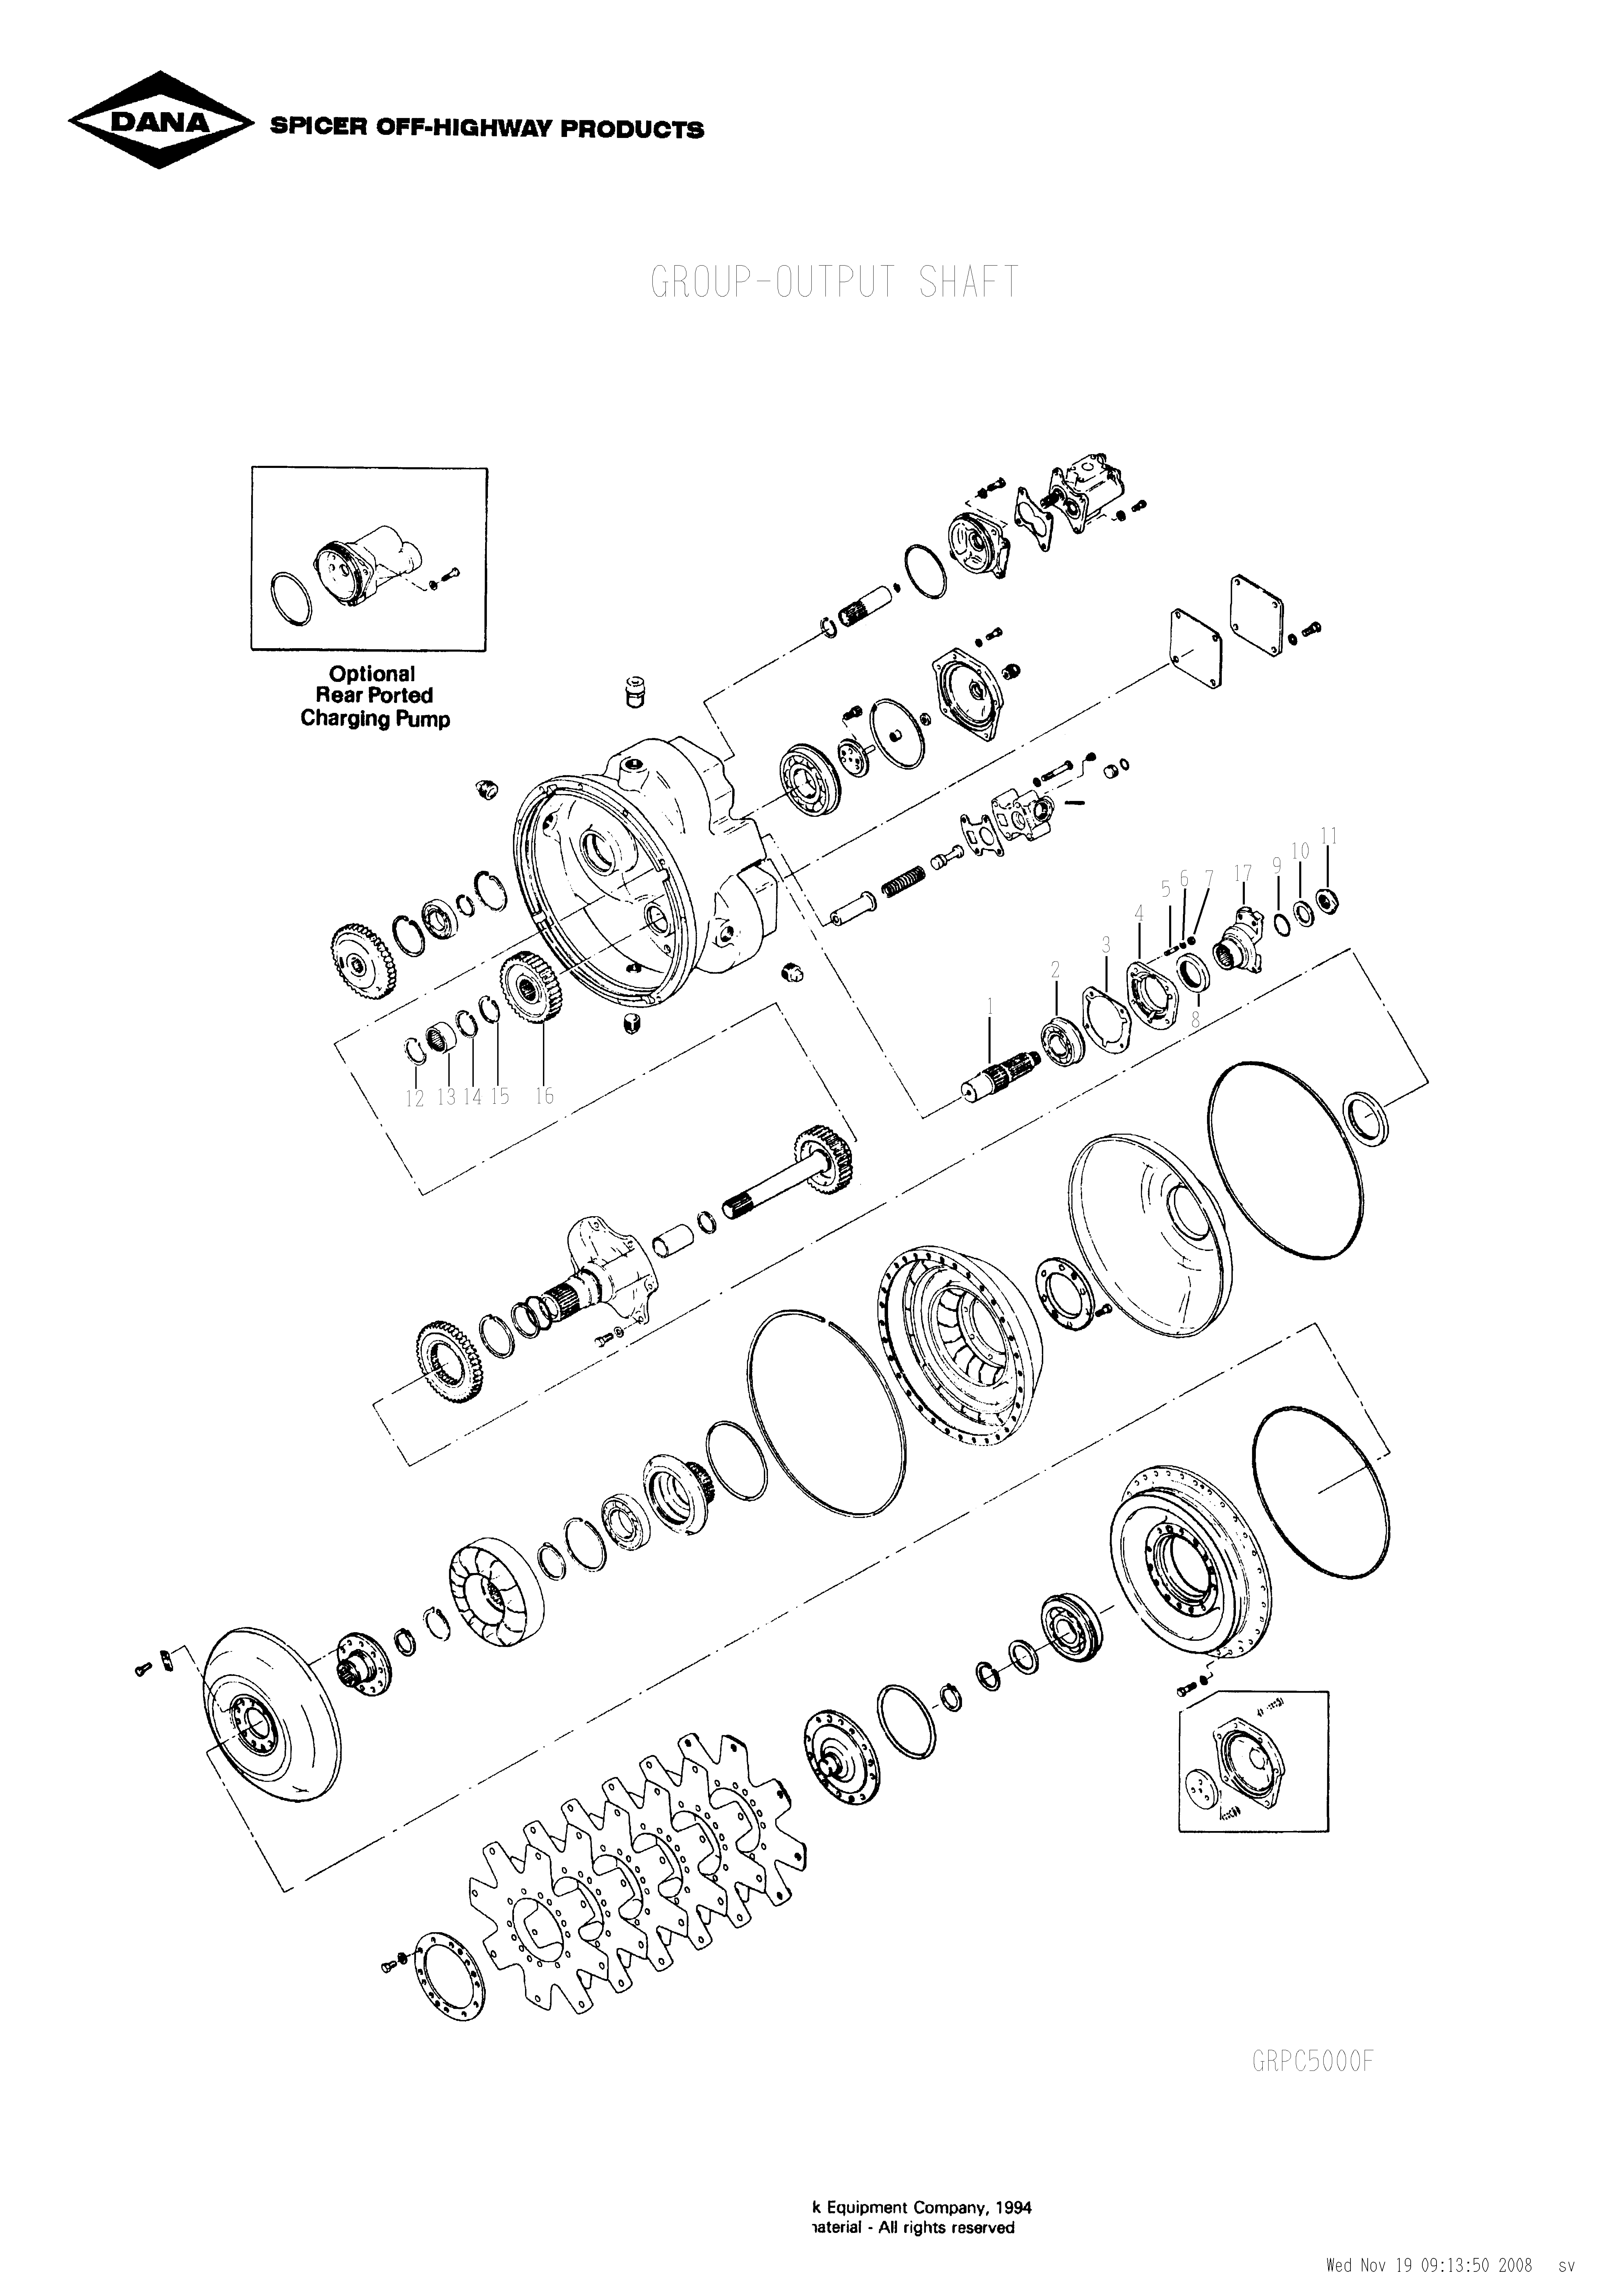 drawing for SCHOEMA, SCHOETTLER MASCHINENFABRIK K24.000102 - O-RING